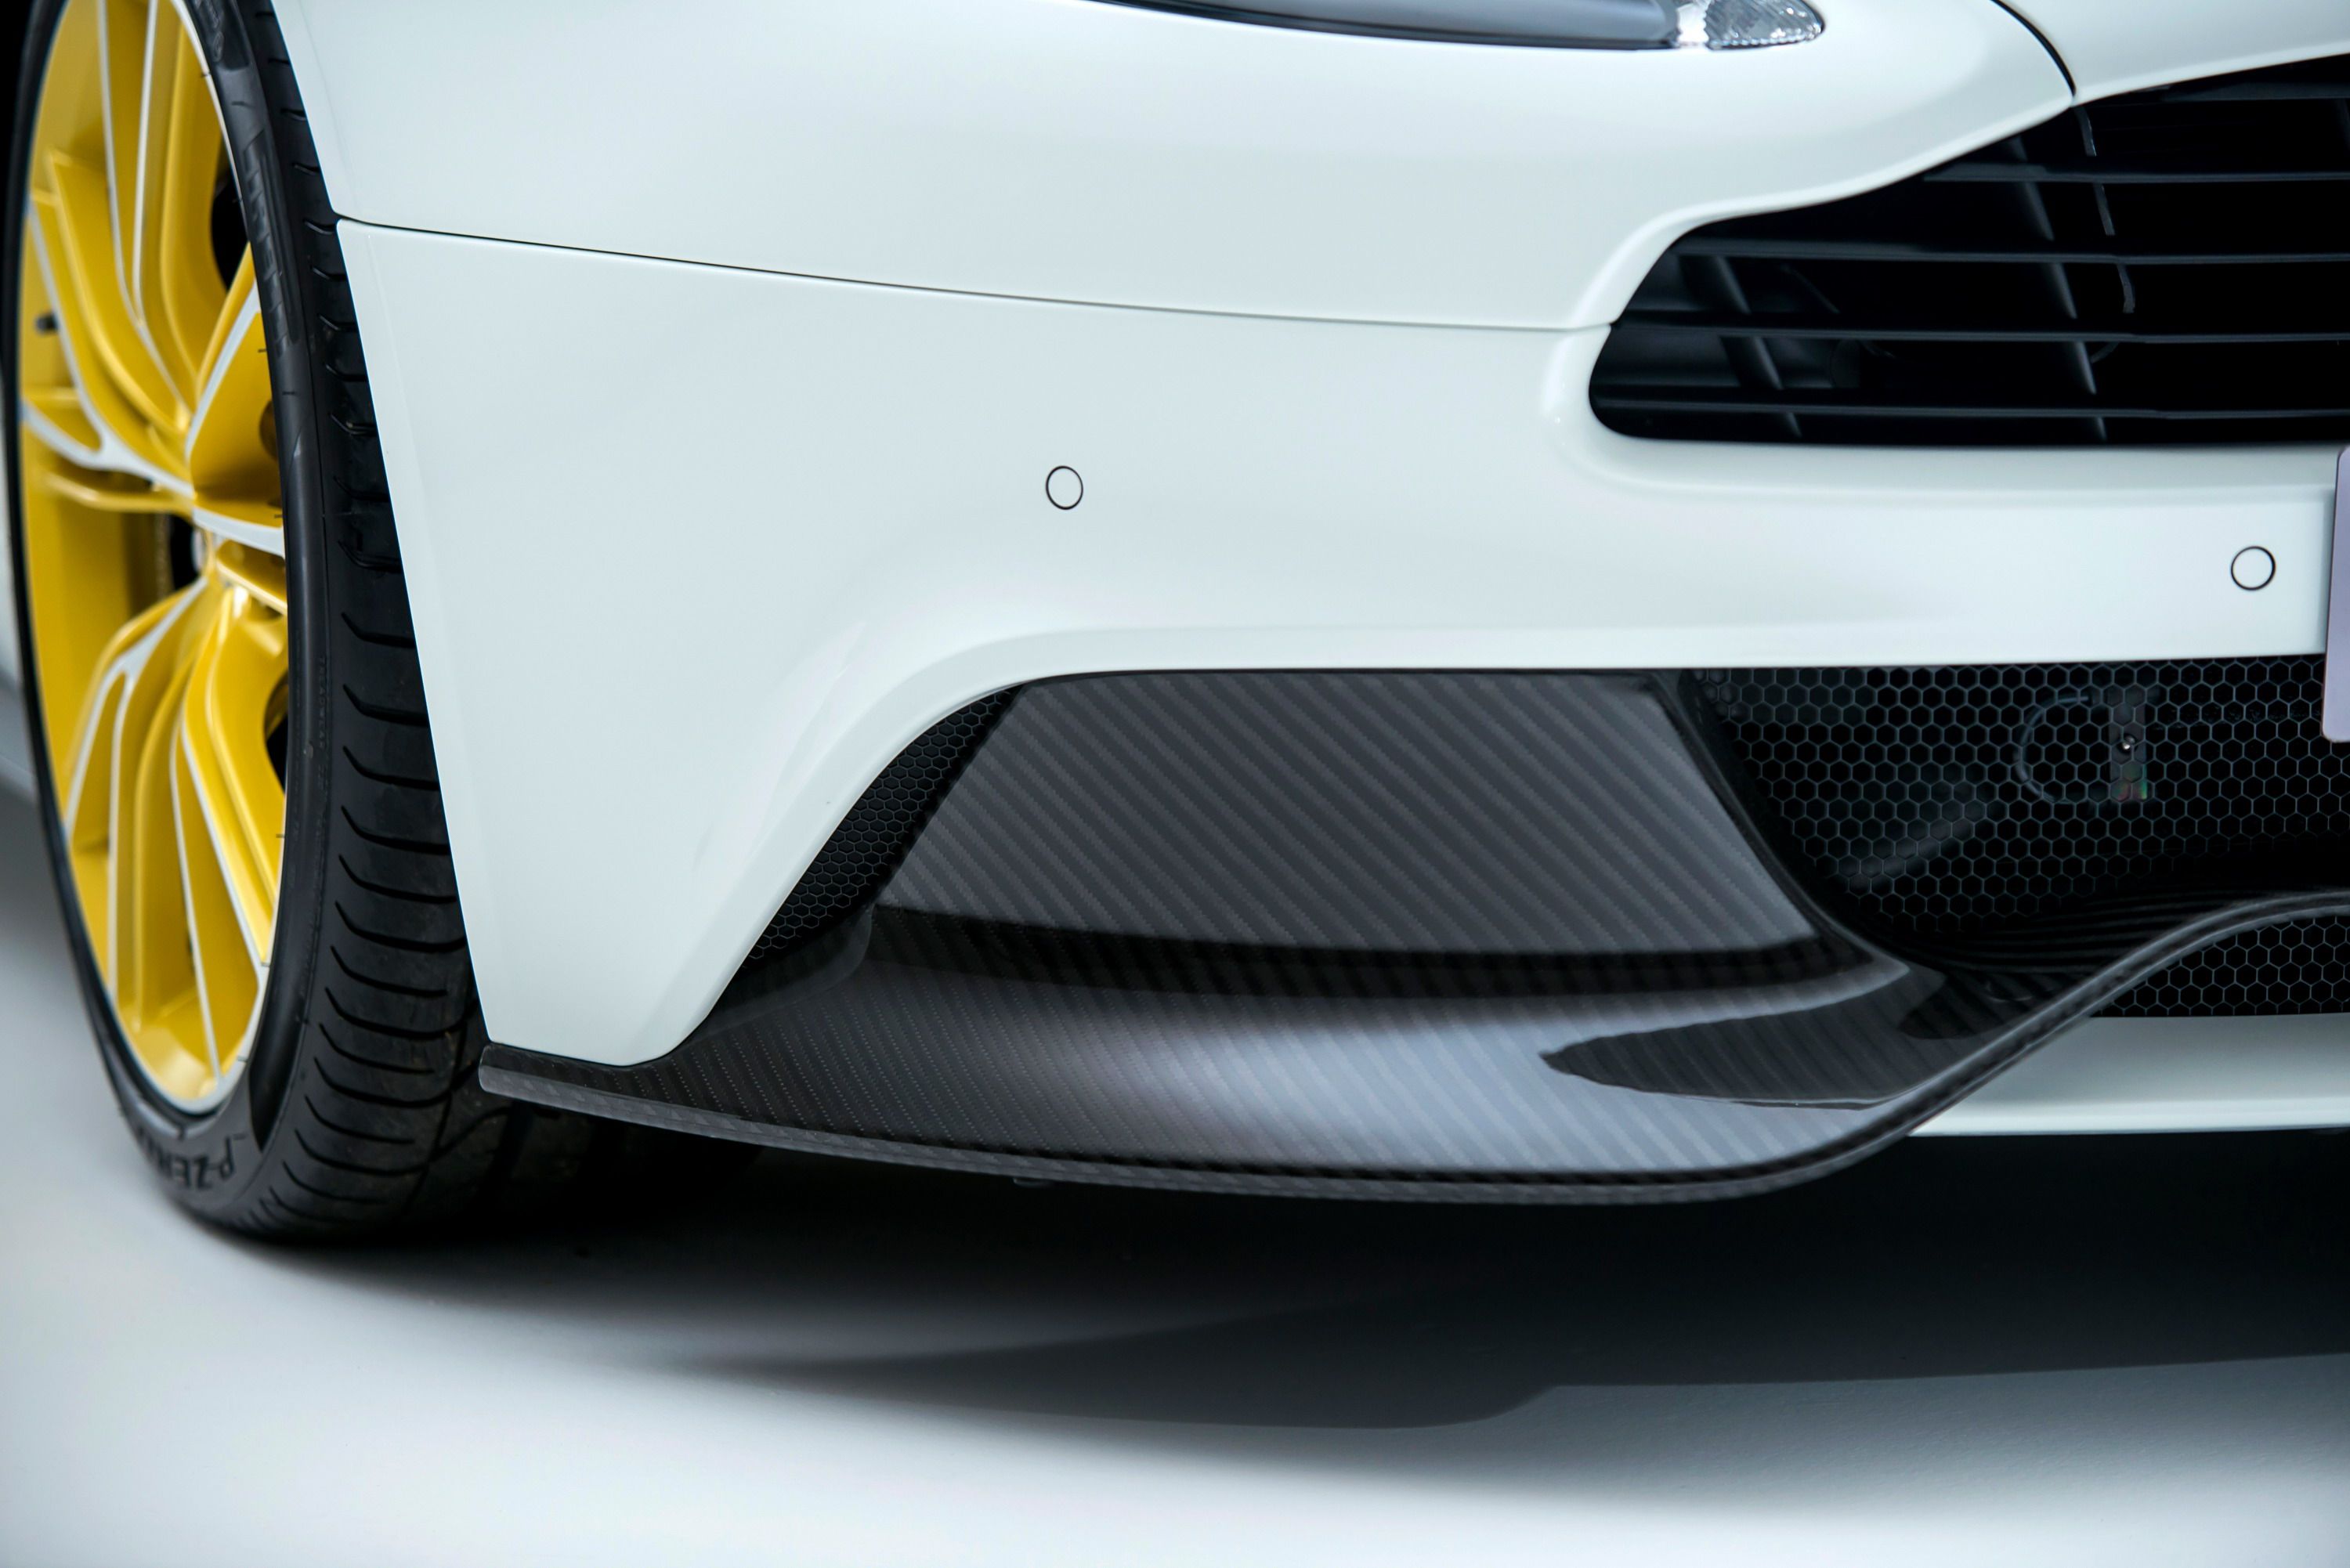 2015 Aston Martin Works 60th Anniversary Limited Edition Vanquish